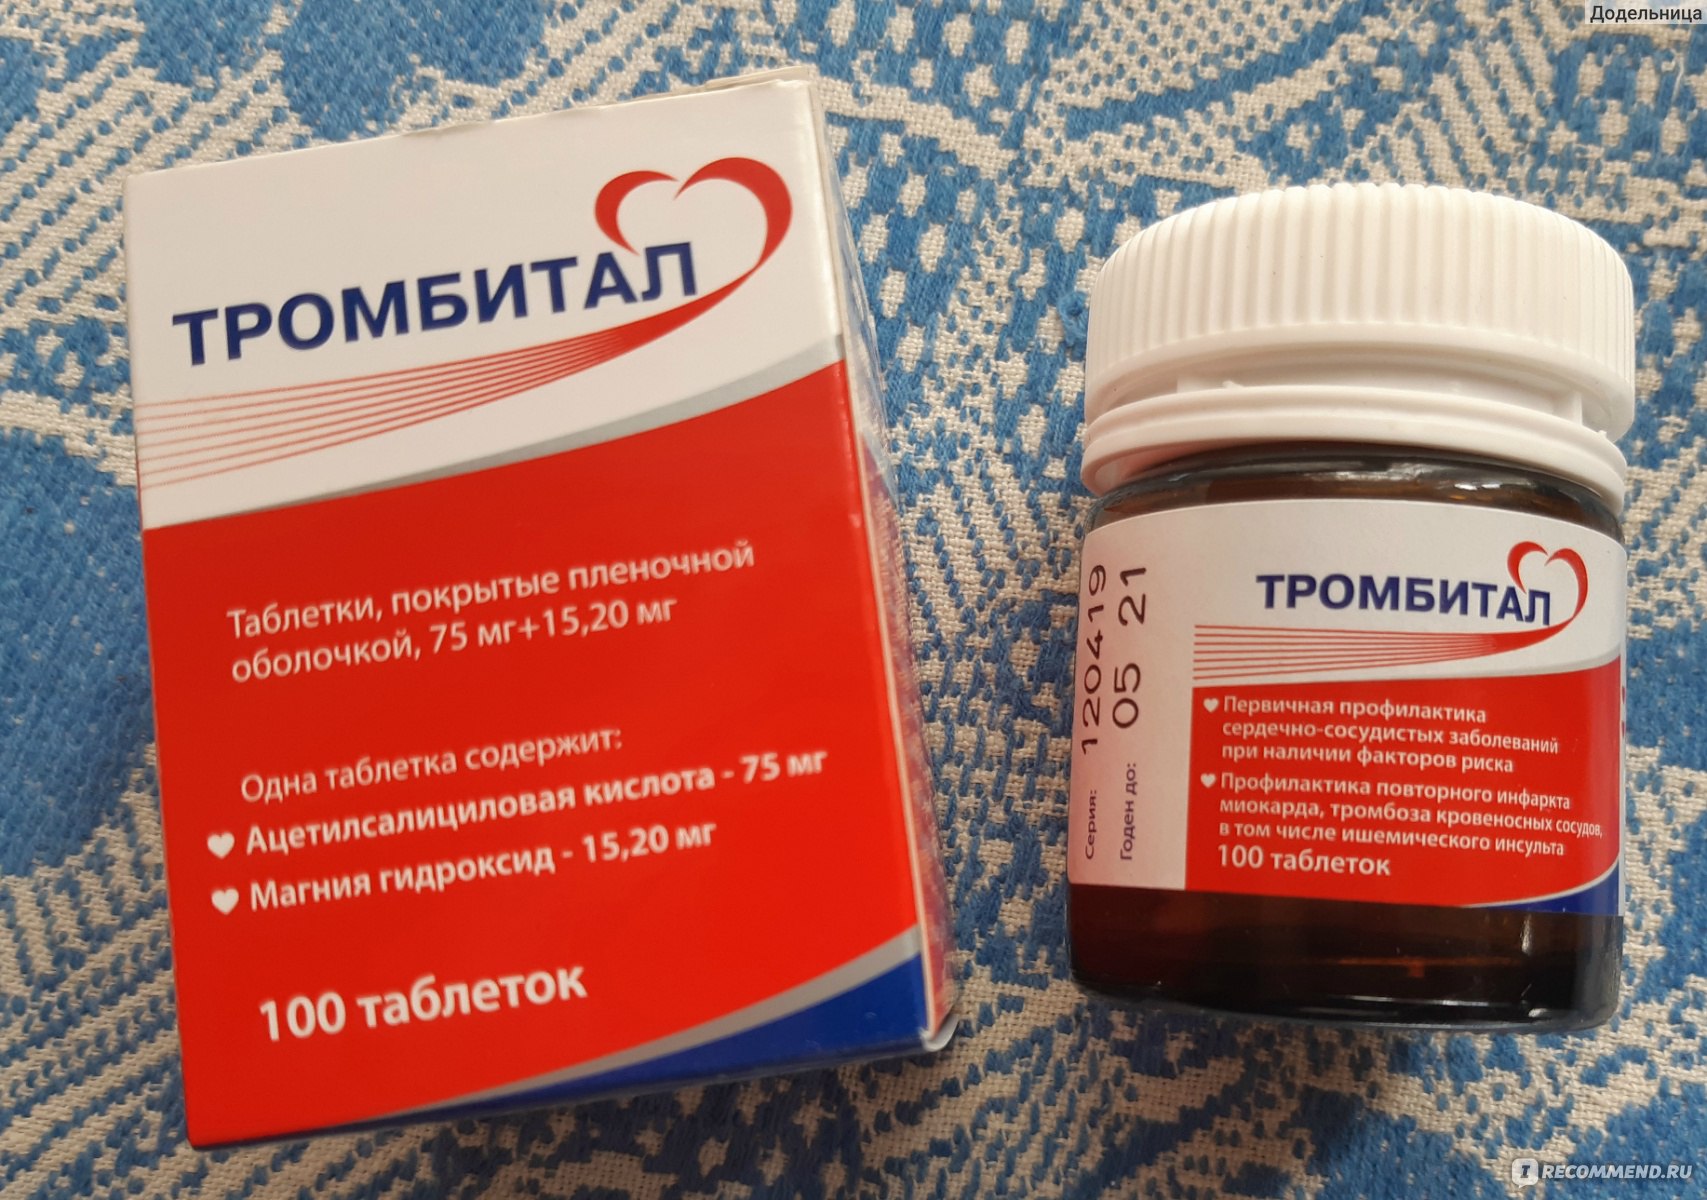 Лекарственный препарат OTC pharm Тромбитал - «Тромбитал полный аналог .